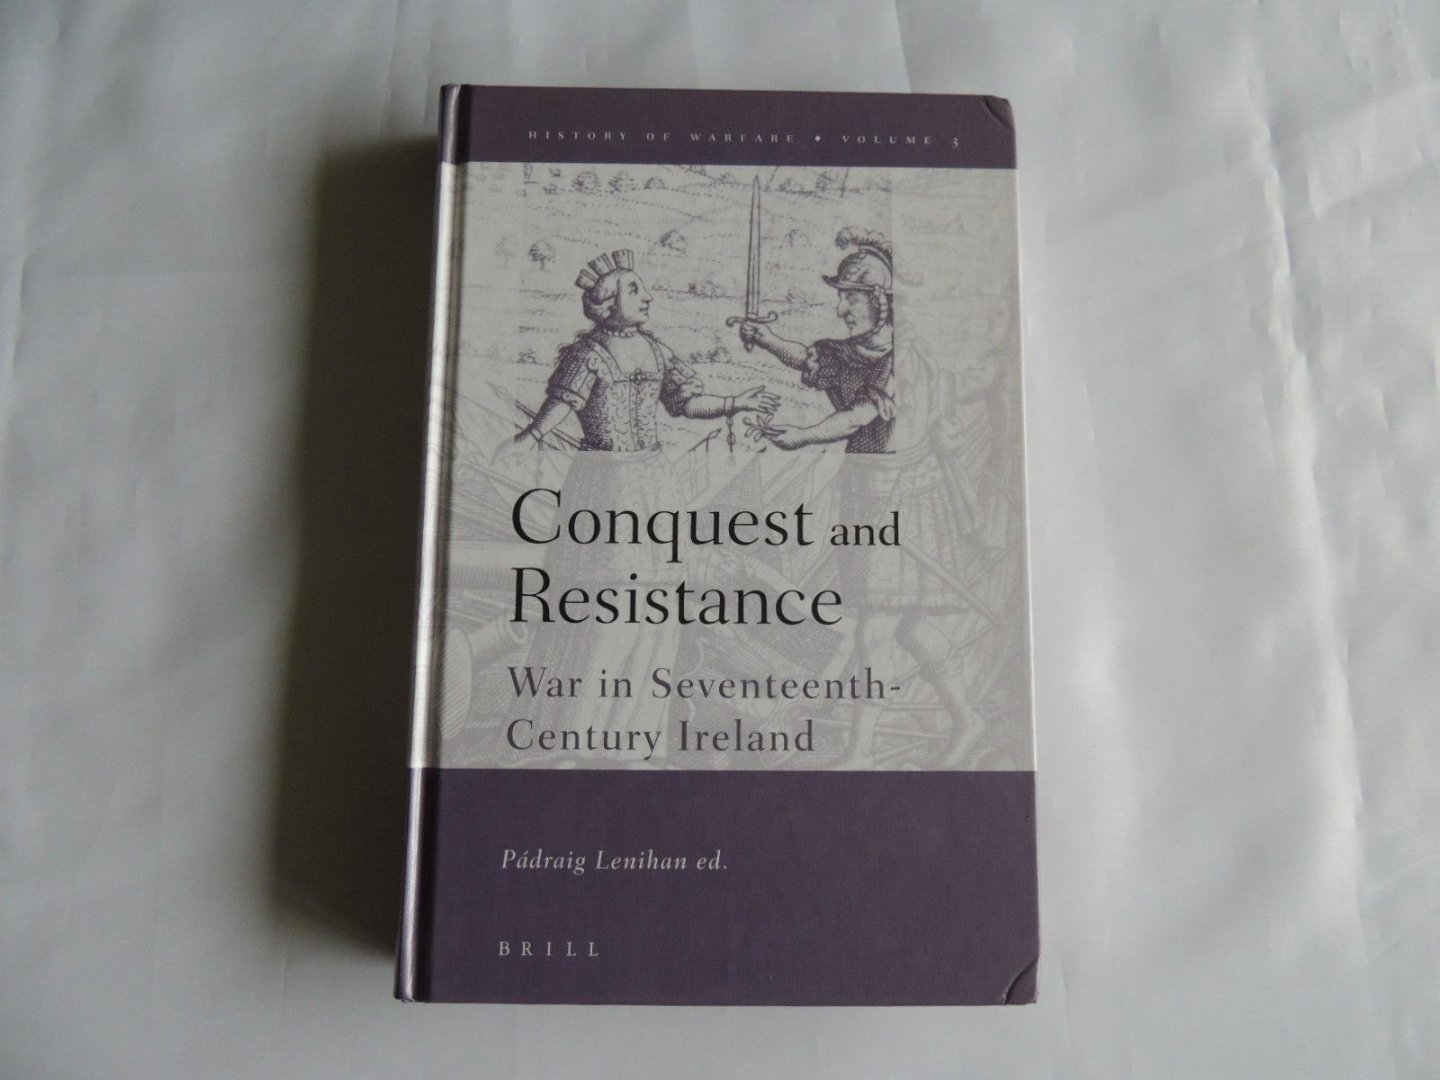 Padraig Lenihan, Kelly de Vries - History of Warfare .Volume 3, Conquest and resistance : war in seventeenth-century Ireland